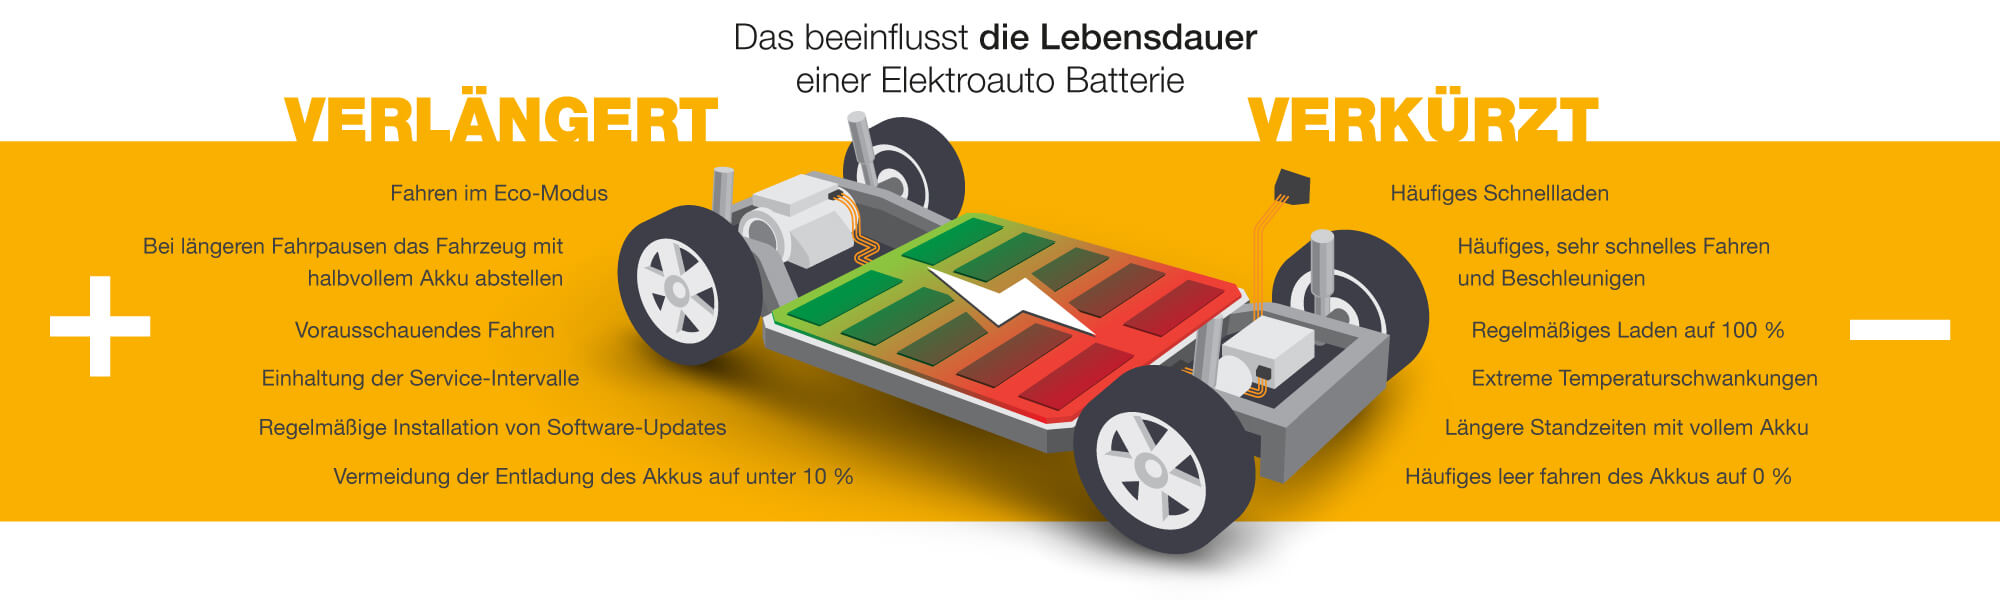 https://www.tuev-nord.de/fileadmin/Content/TUEV_NORD_DE/verkehr/infografik-e-auto-batterie-tipps-lebensdauer-orange.jpg